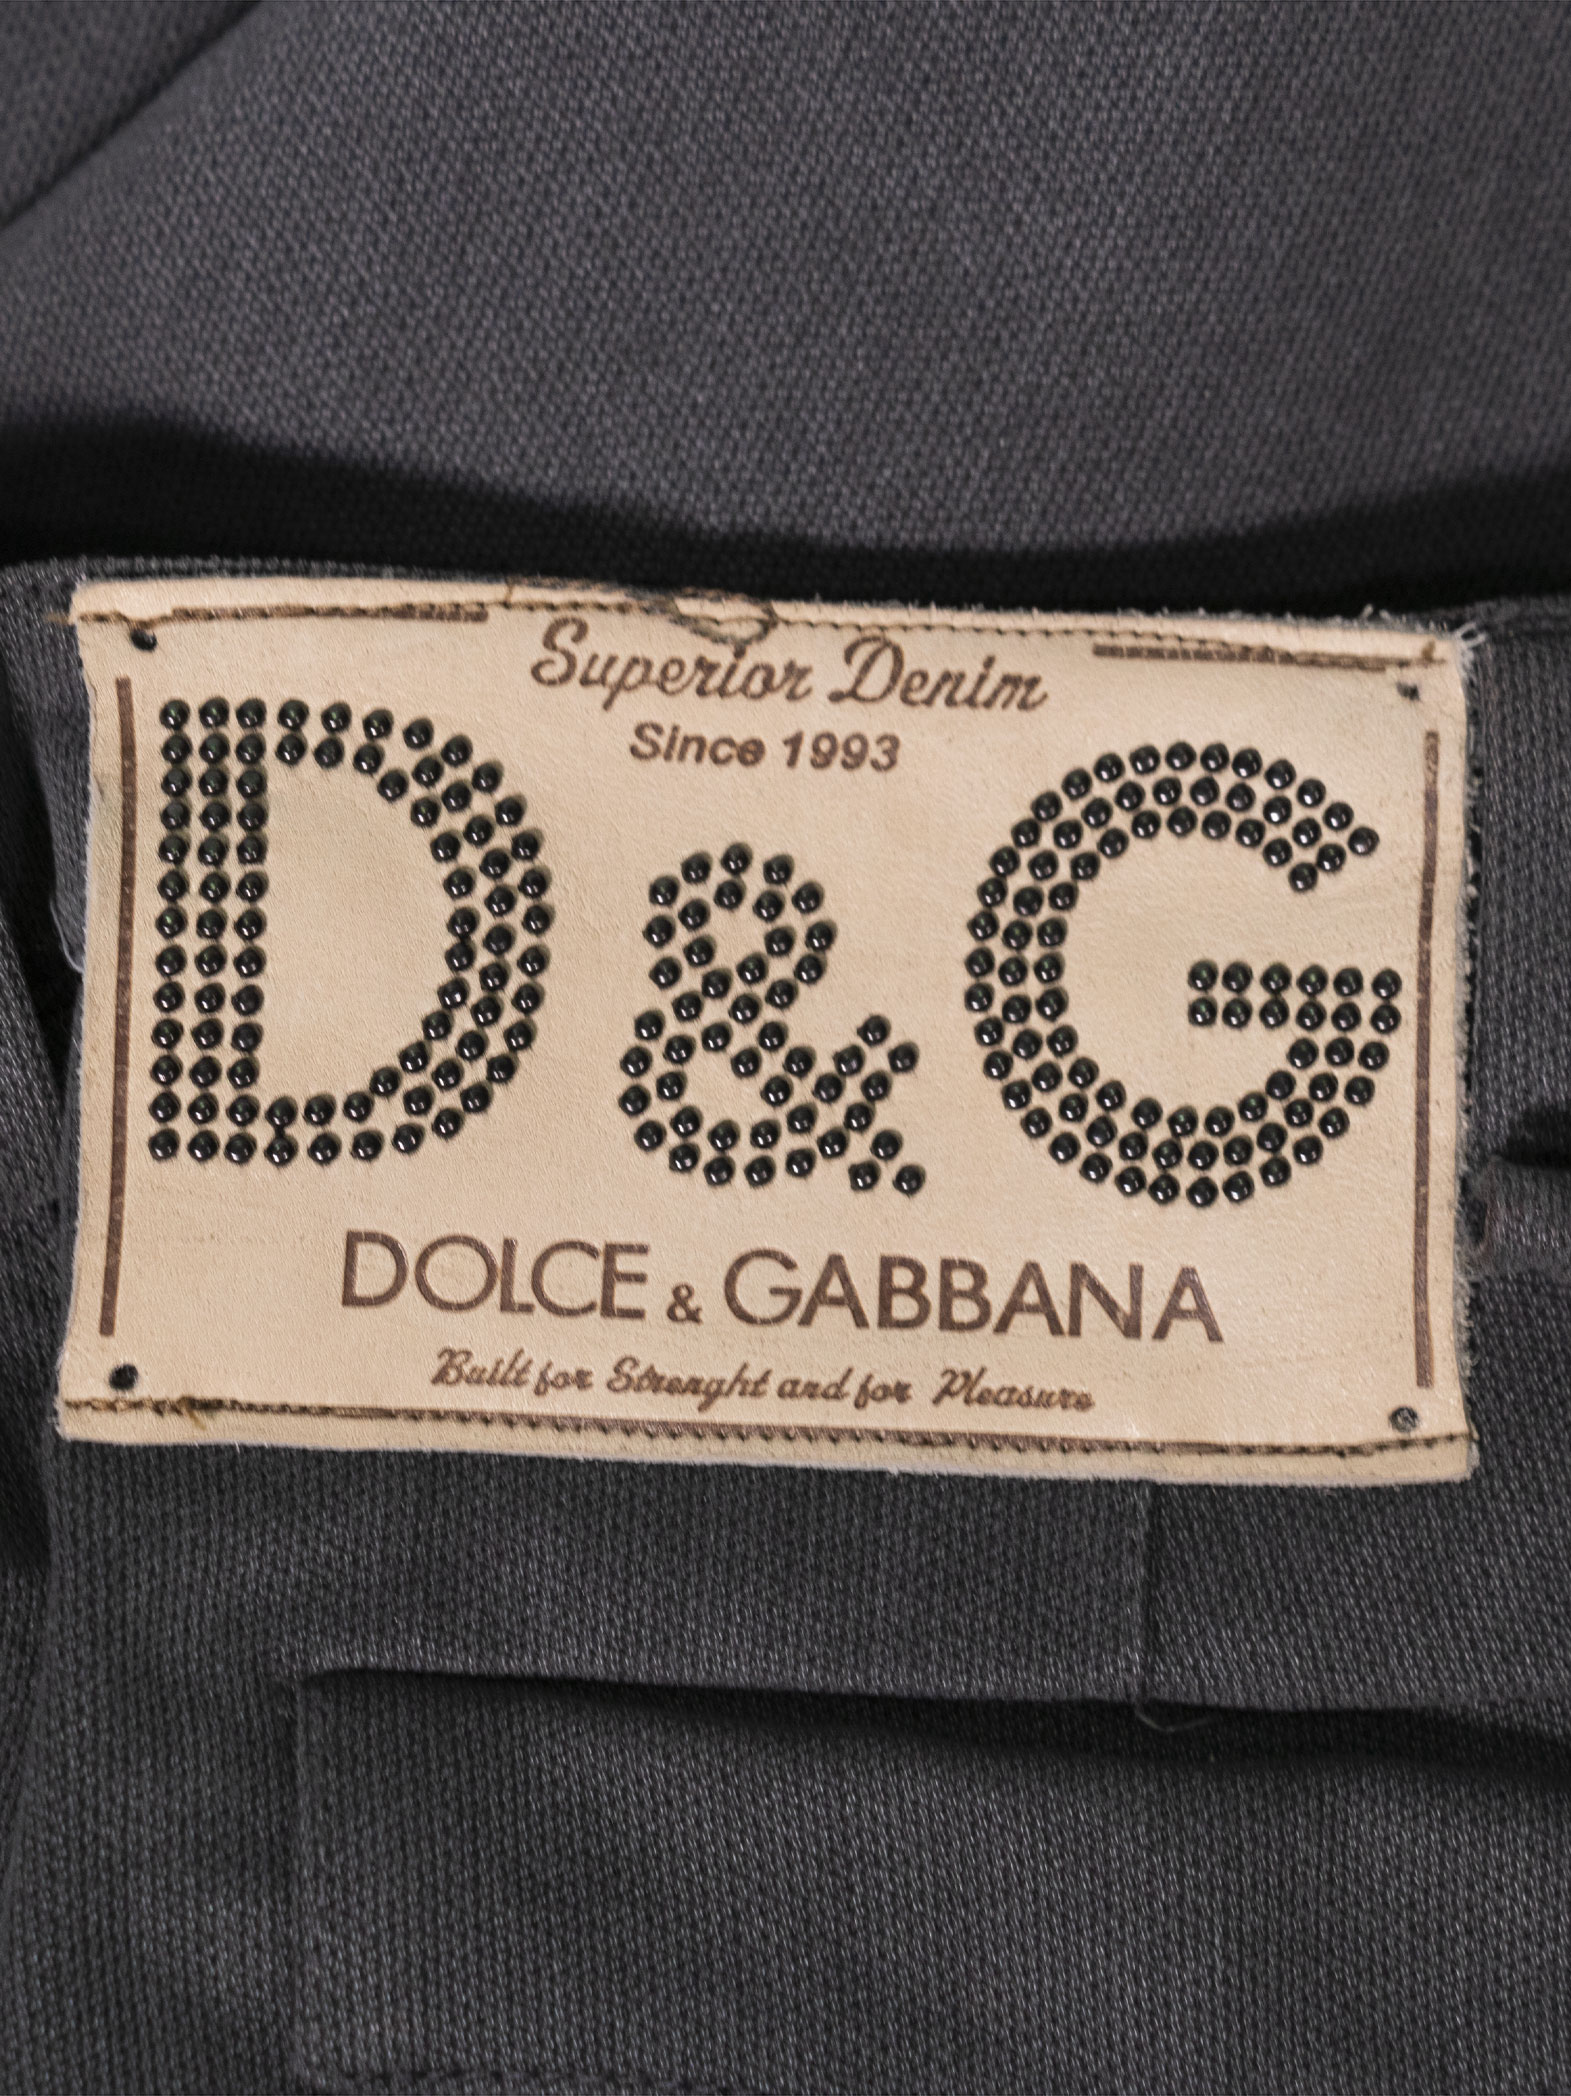 Dolce e Gabbana - 2000s baggy pants